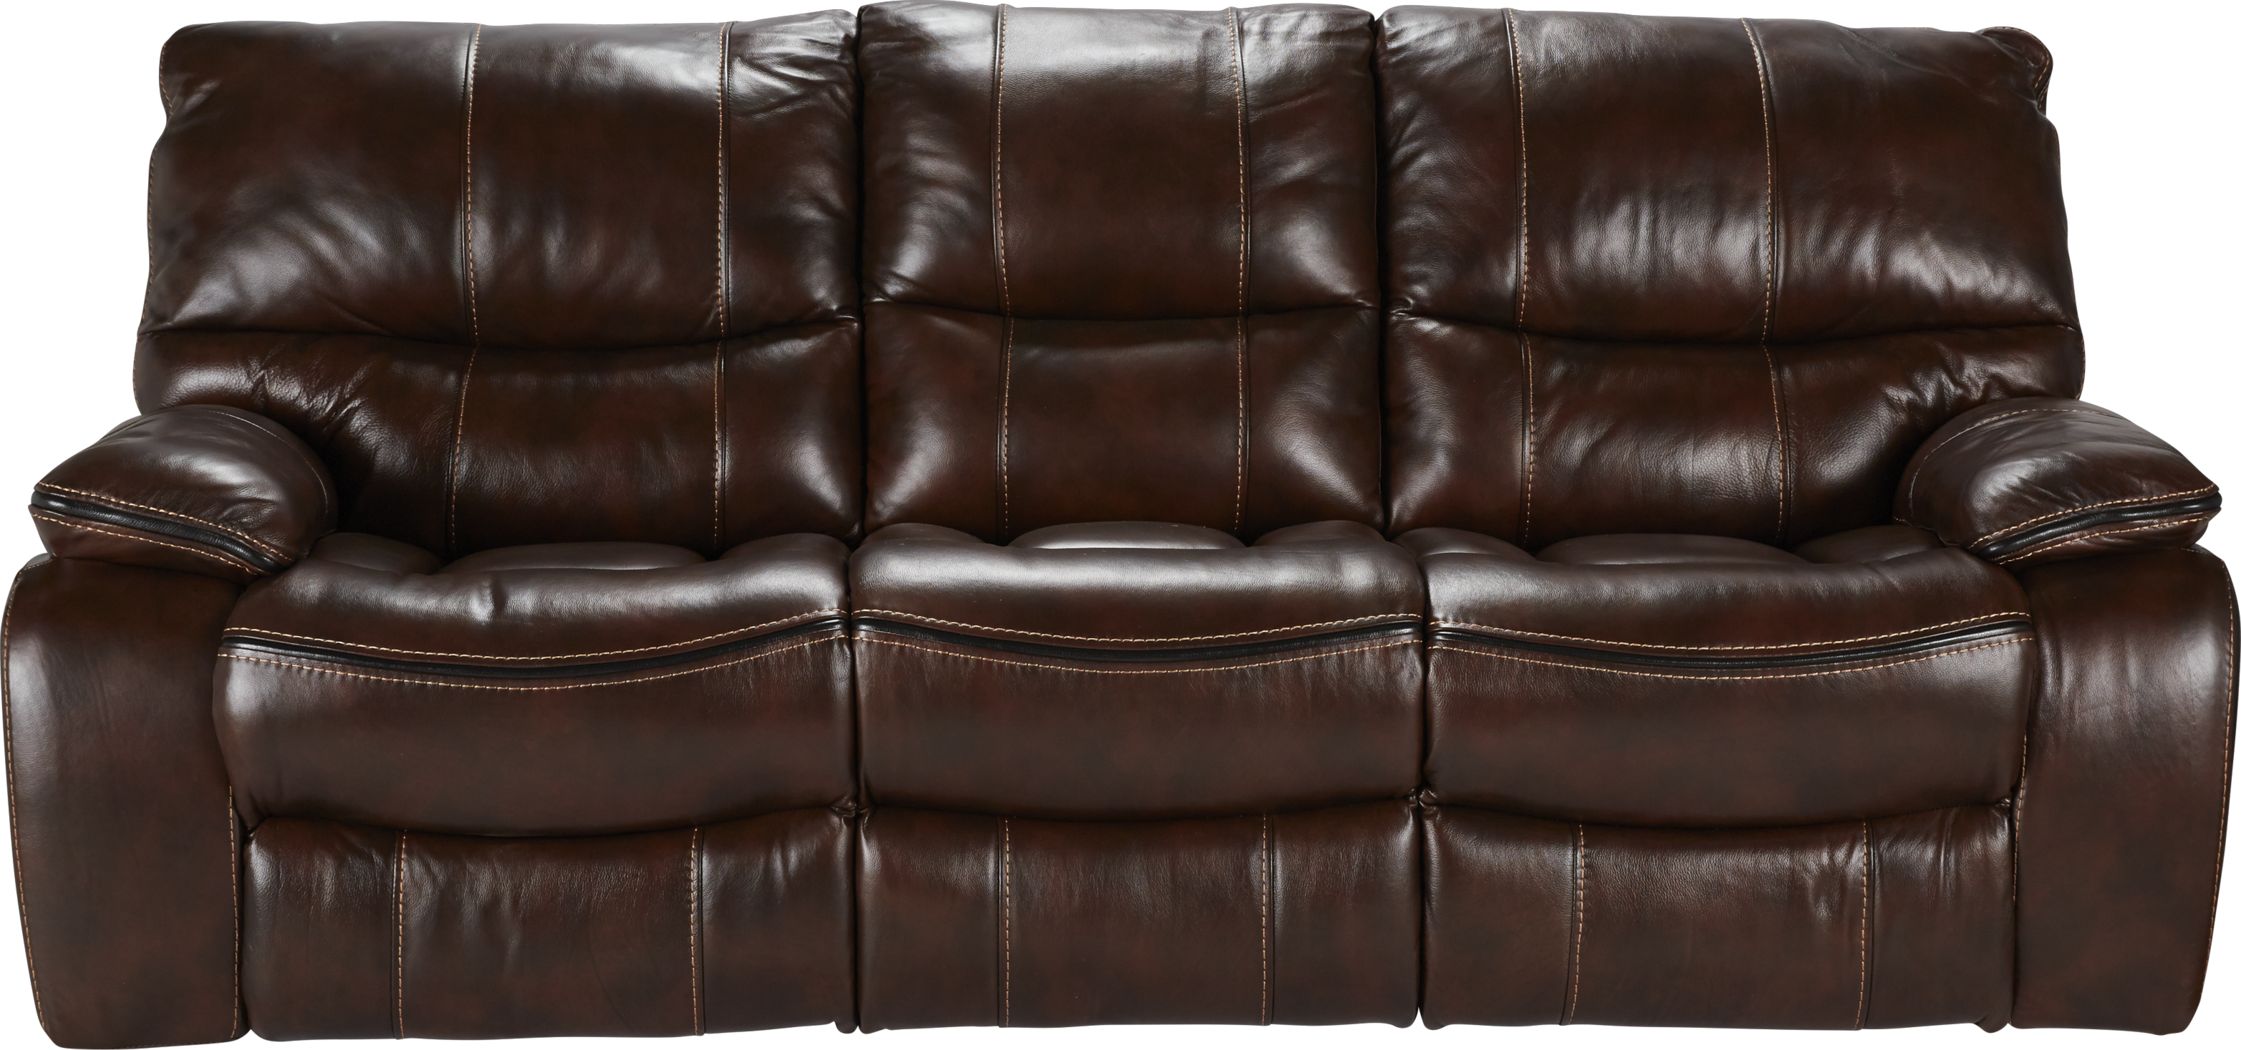 cindy crawford slate leather sofa